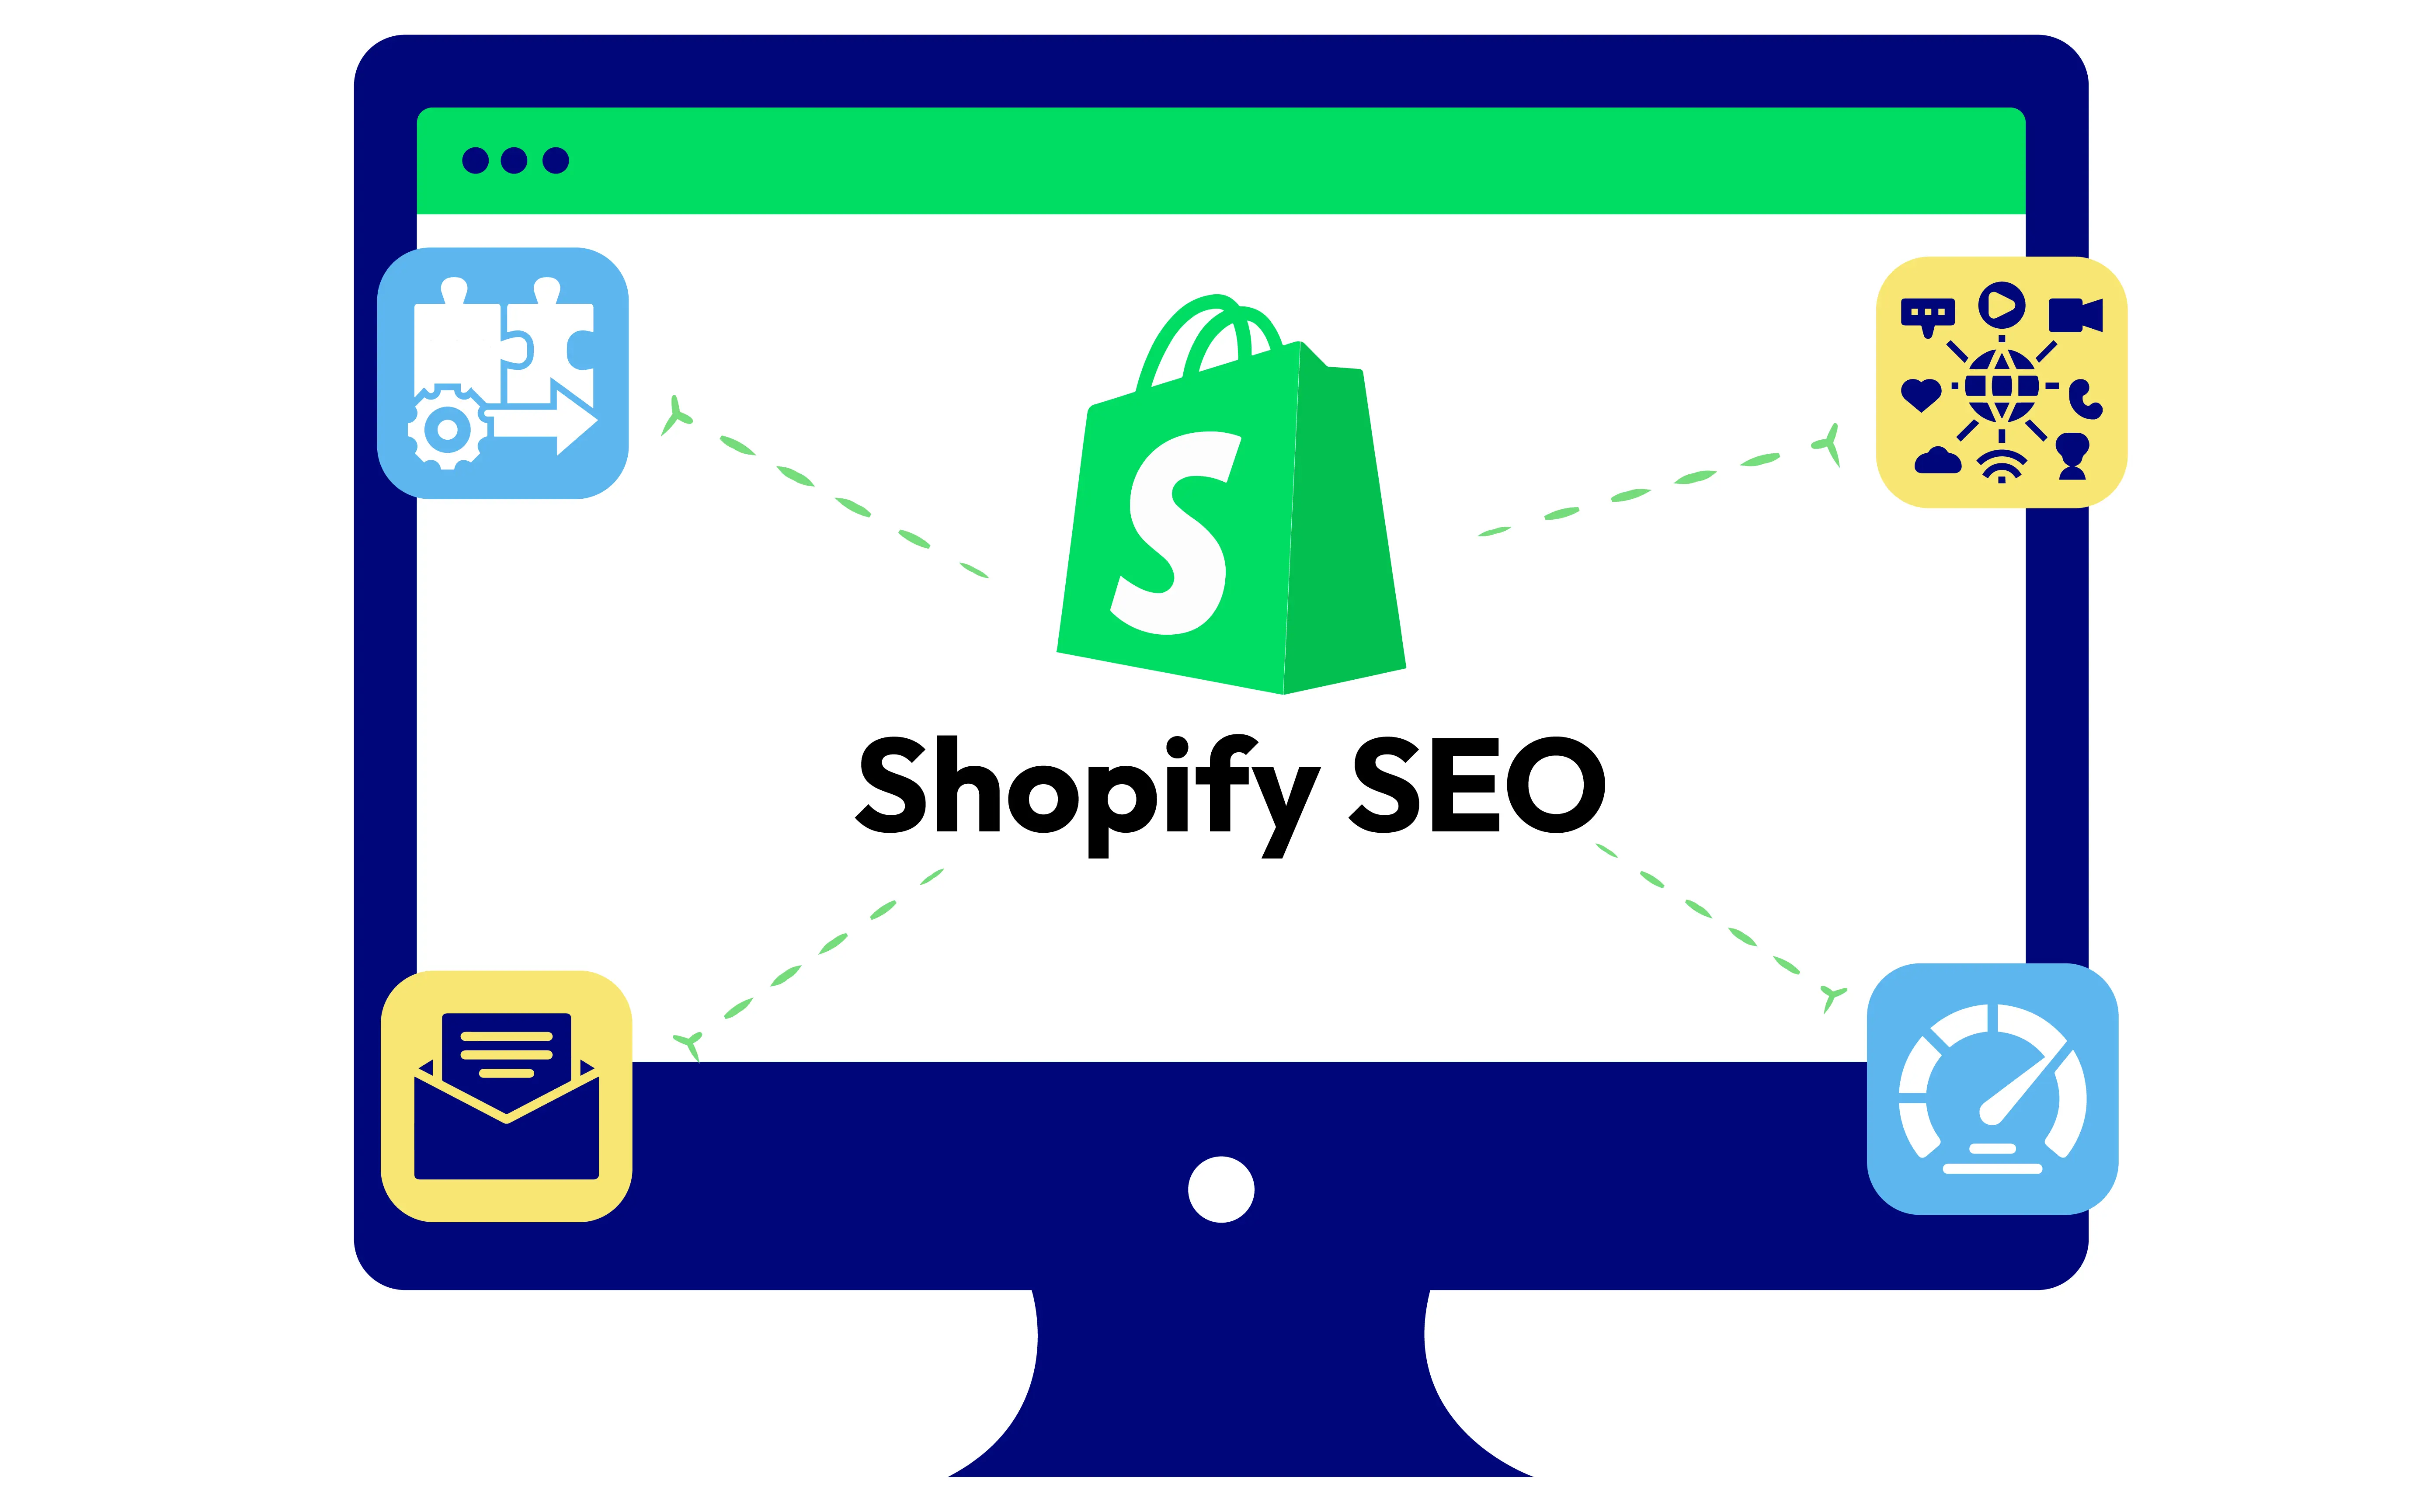 Shopify SEO services